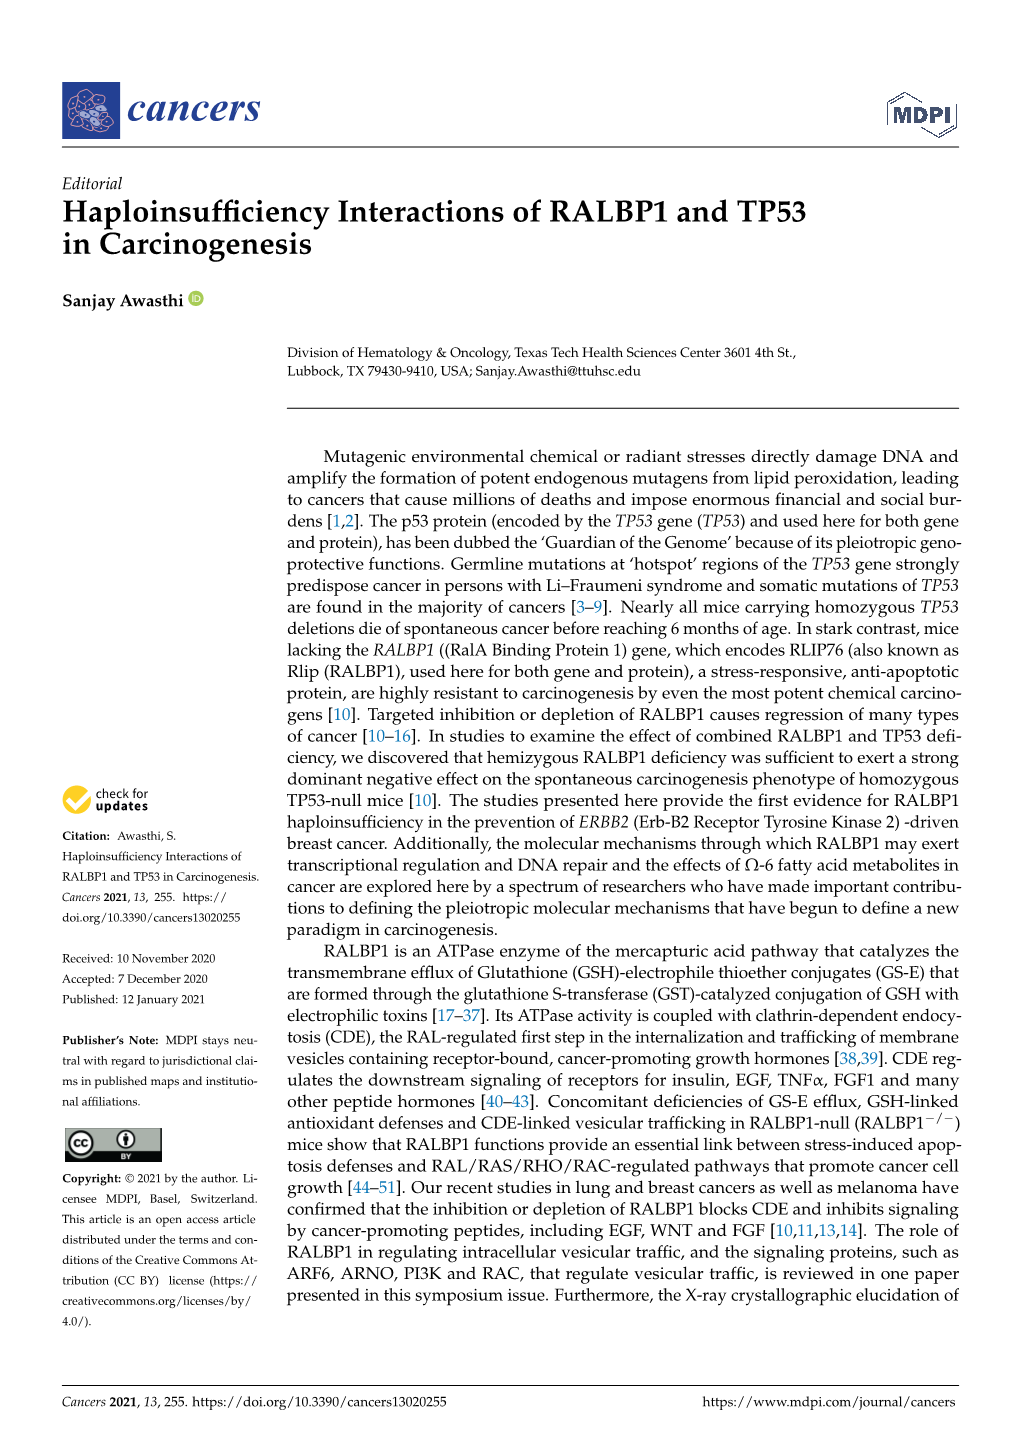 Haploinsufficiency Interactions of RALBP1 and TP53 in Carcinogenesis